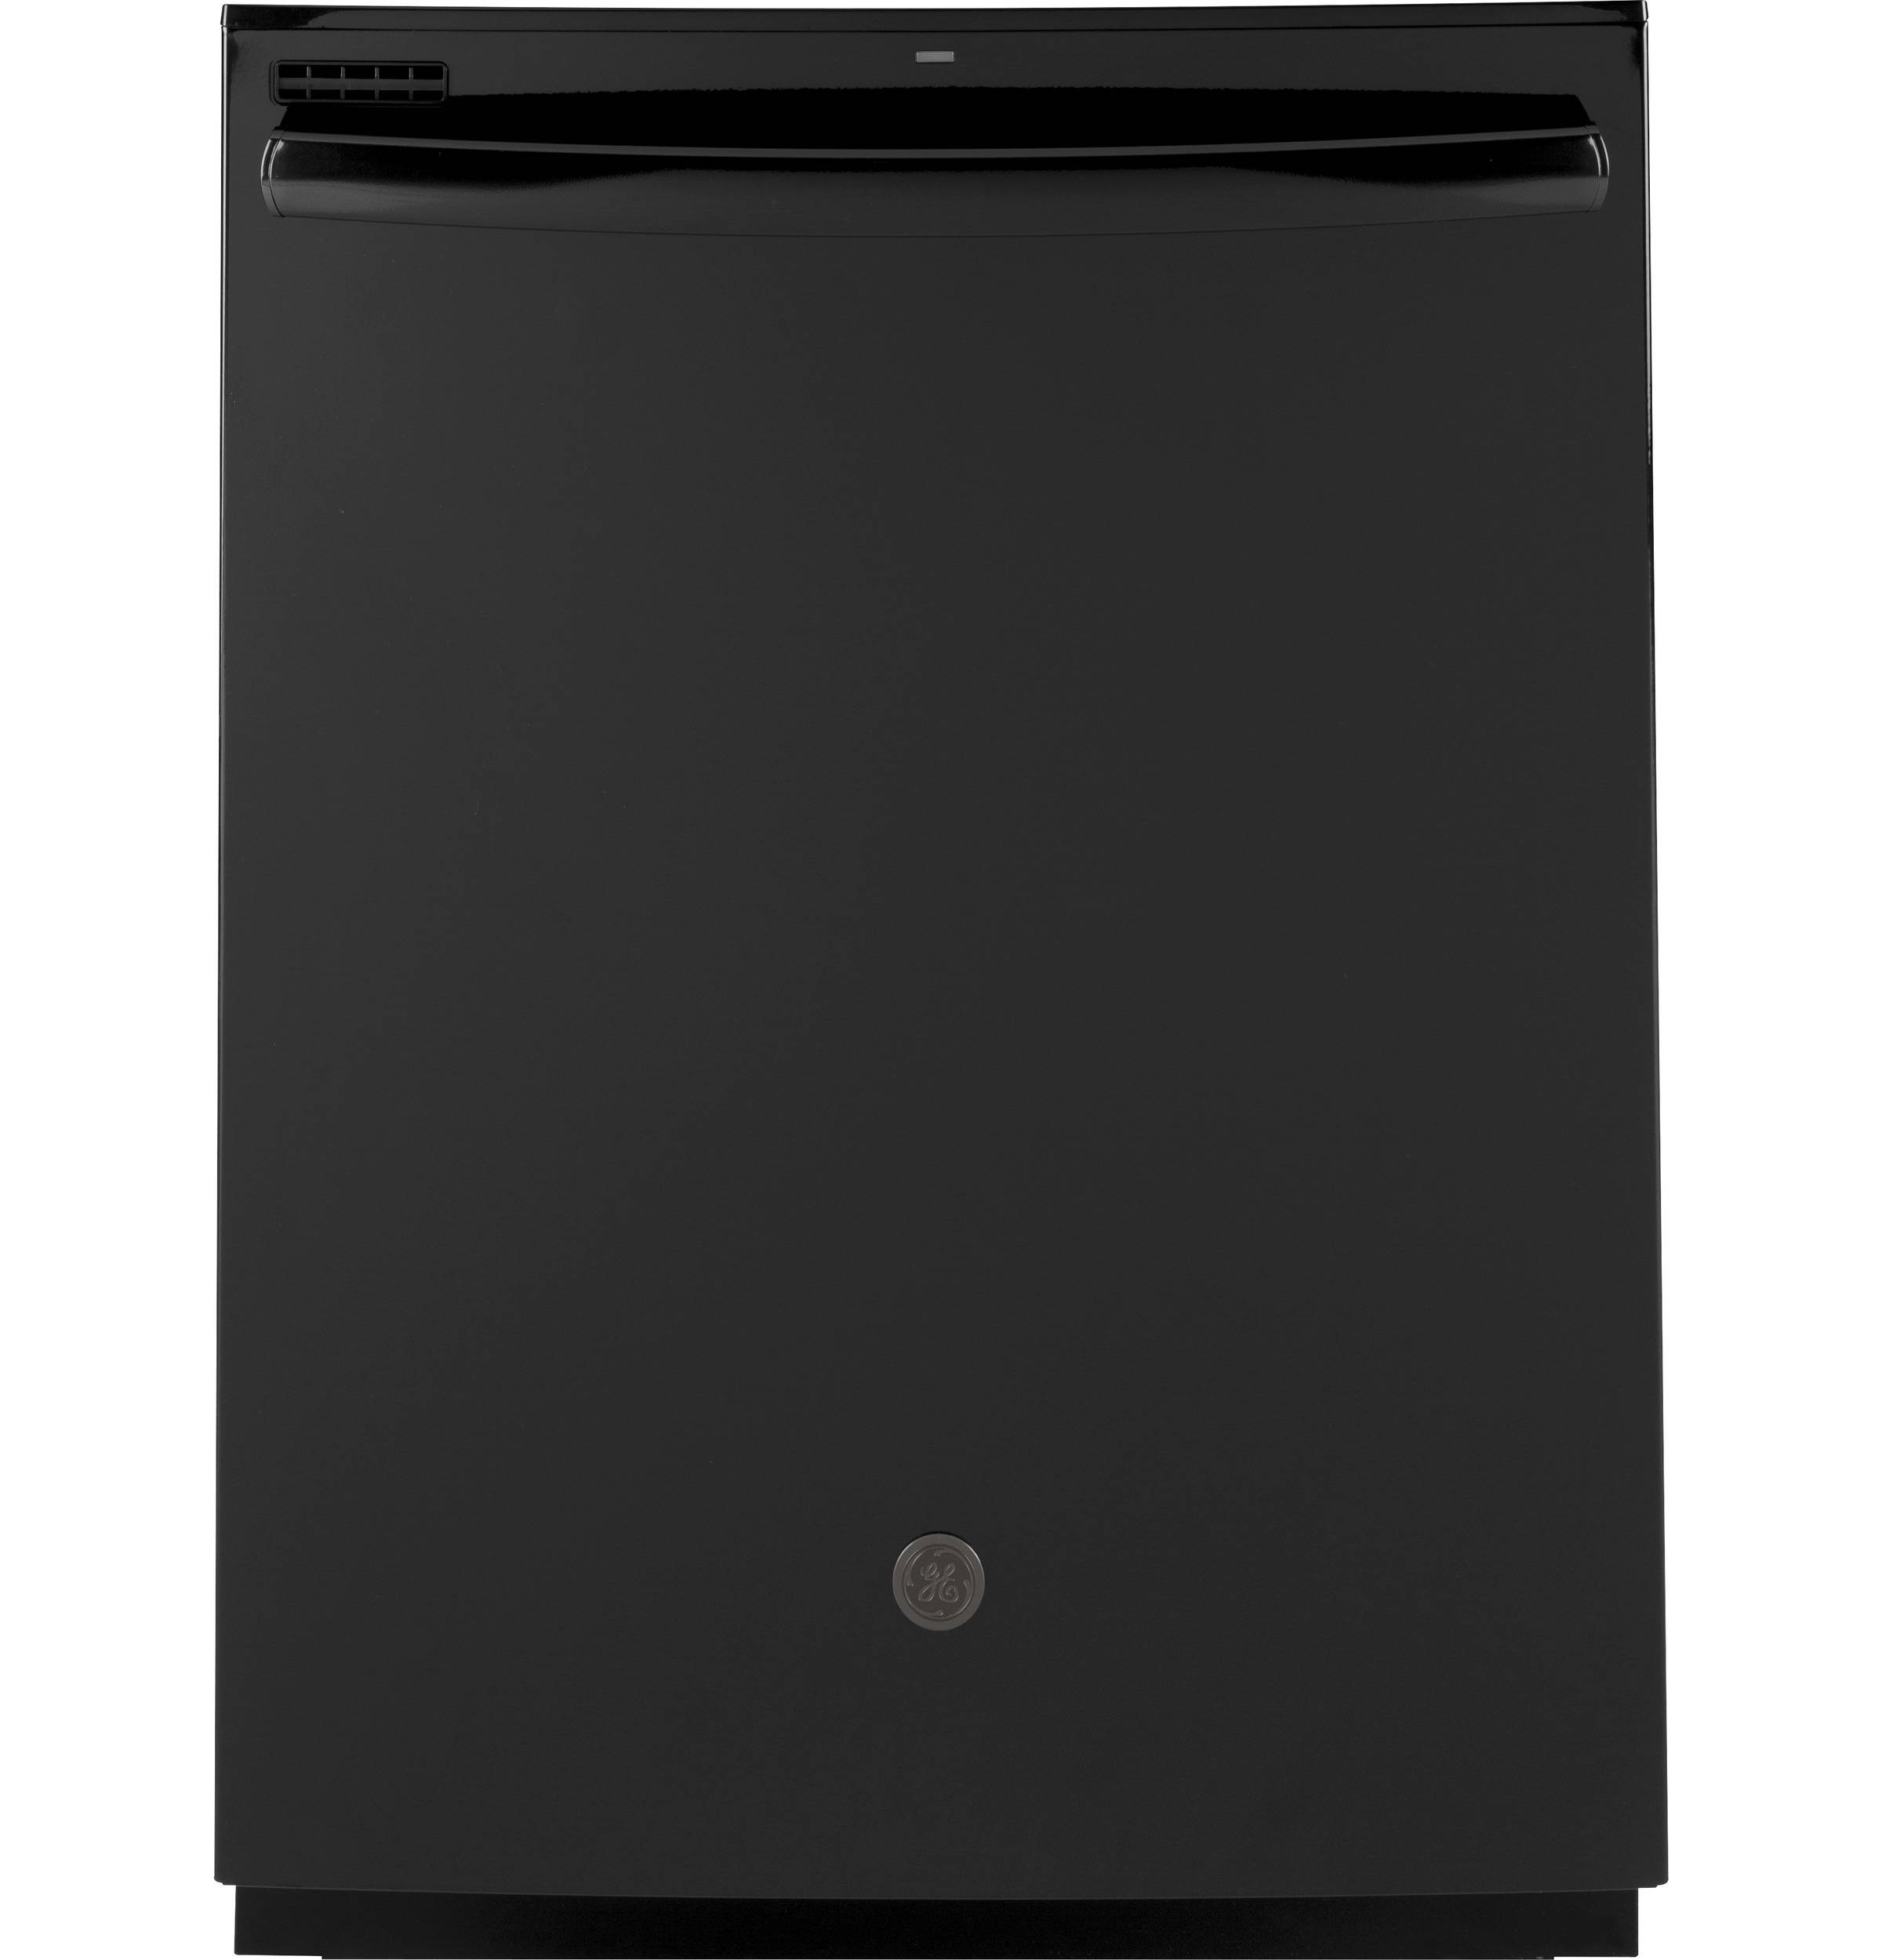 GE® Dishwasher with Hidden Controls (Black)